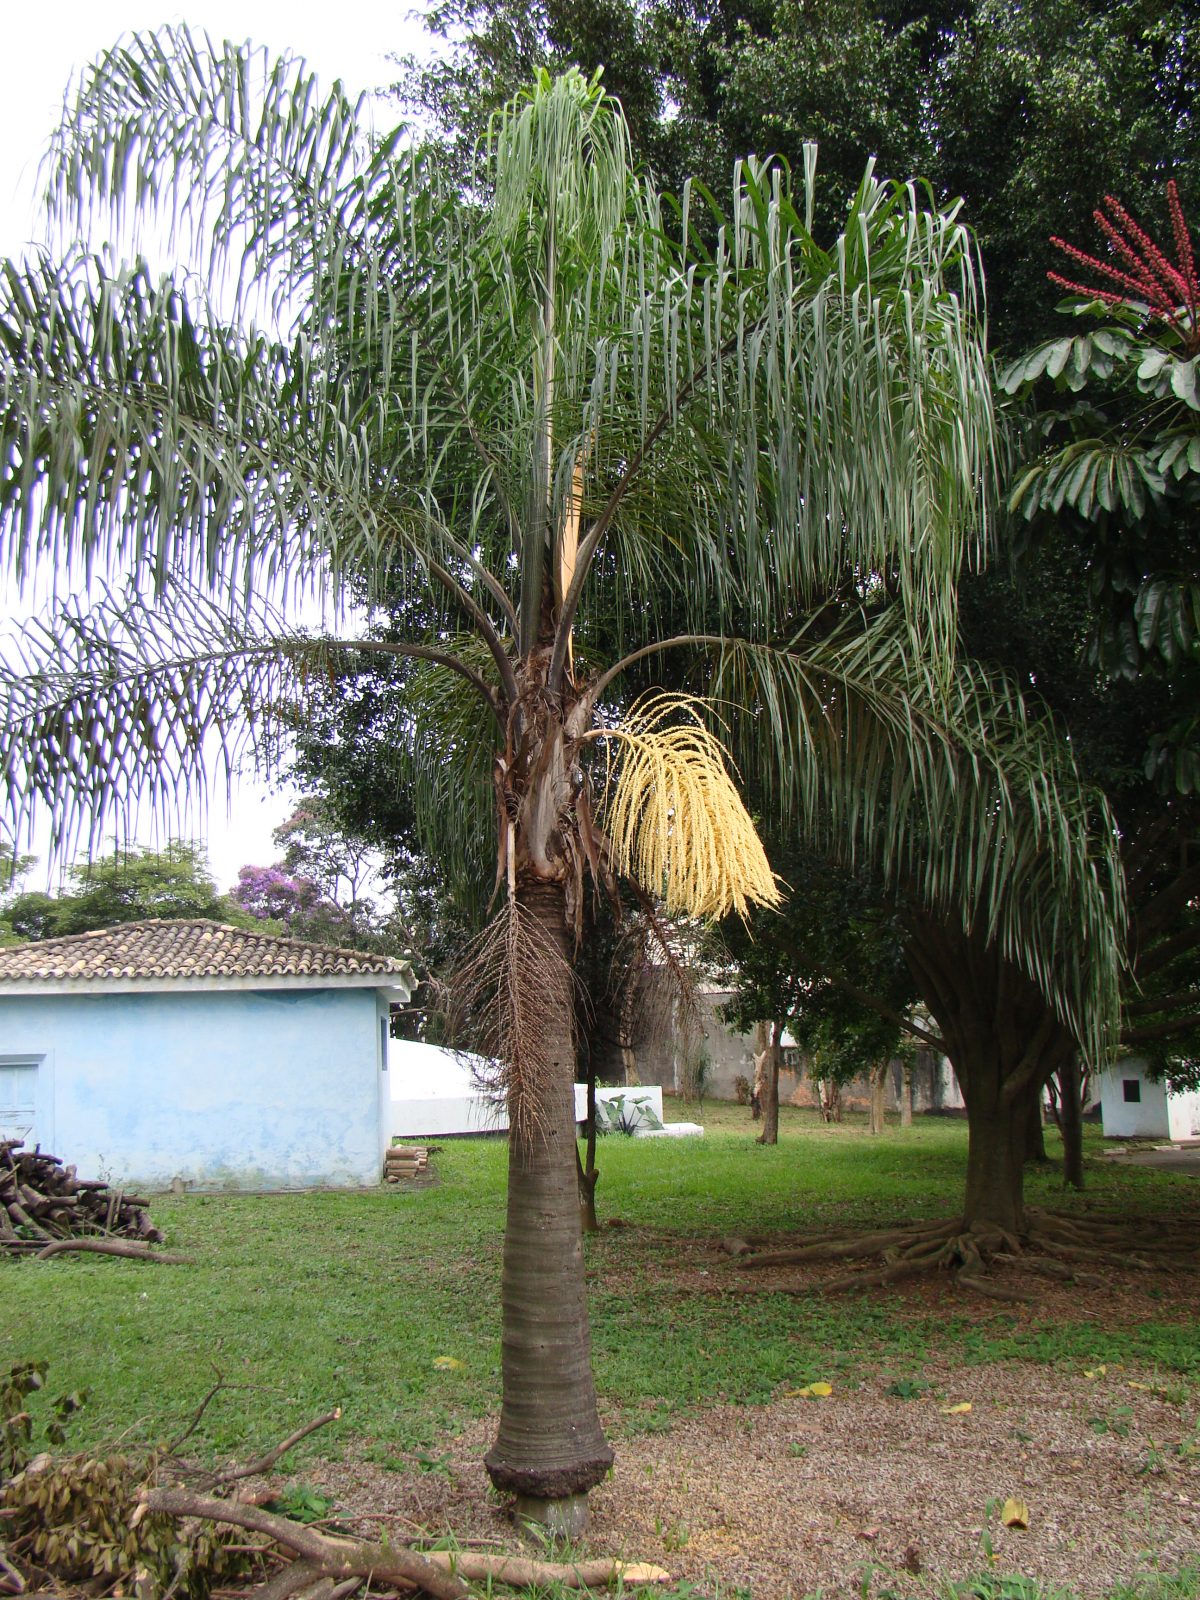 Syagrus romanzoffiana, una palmera muy común